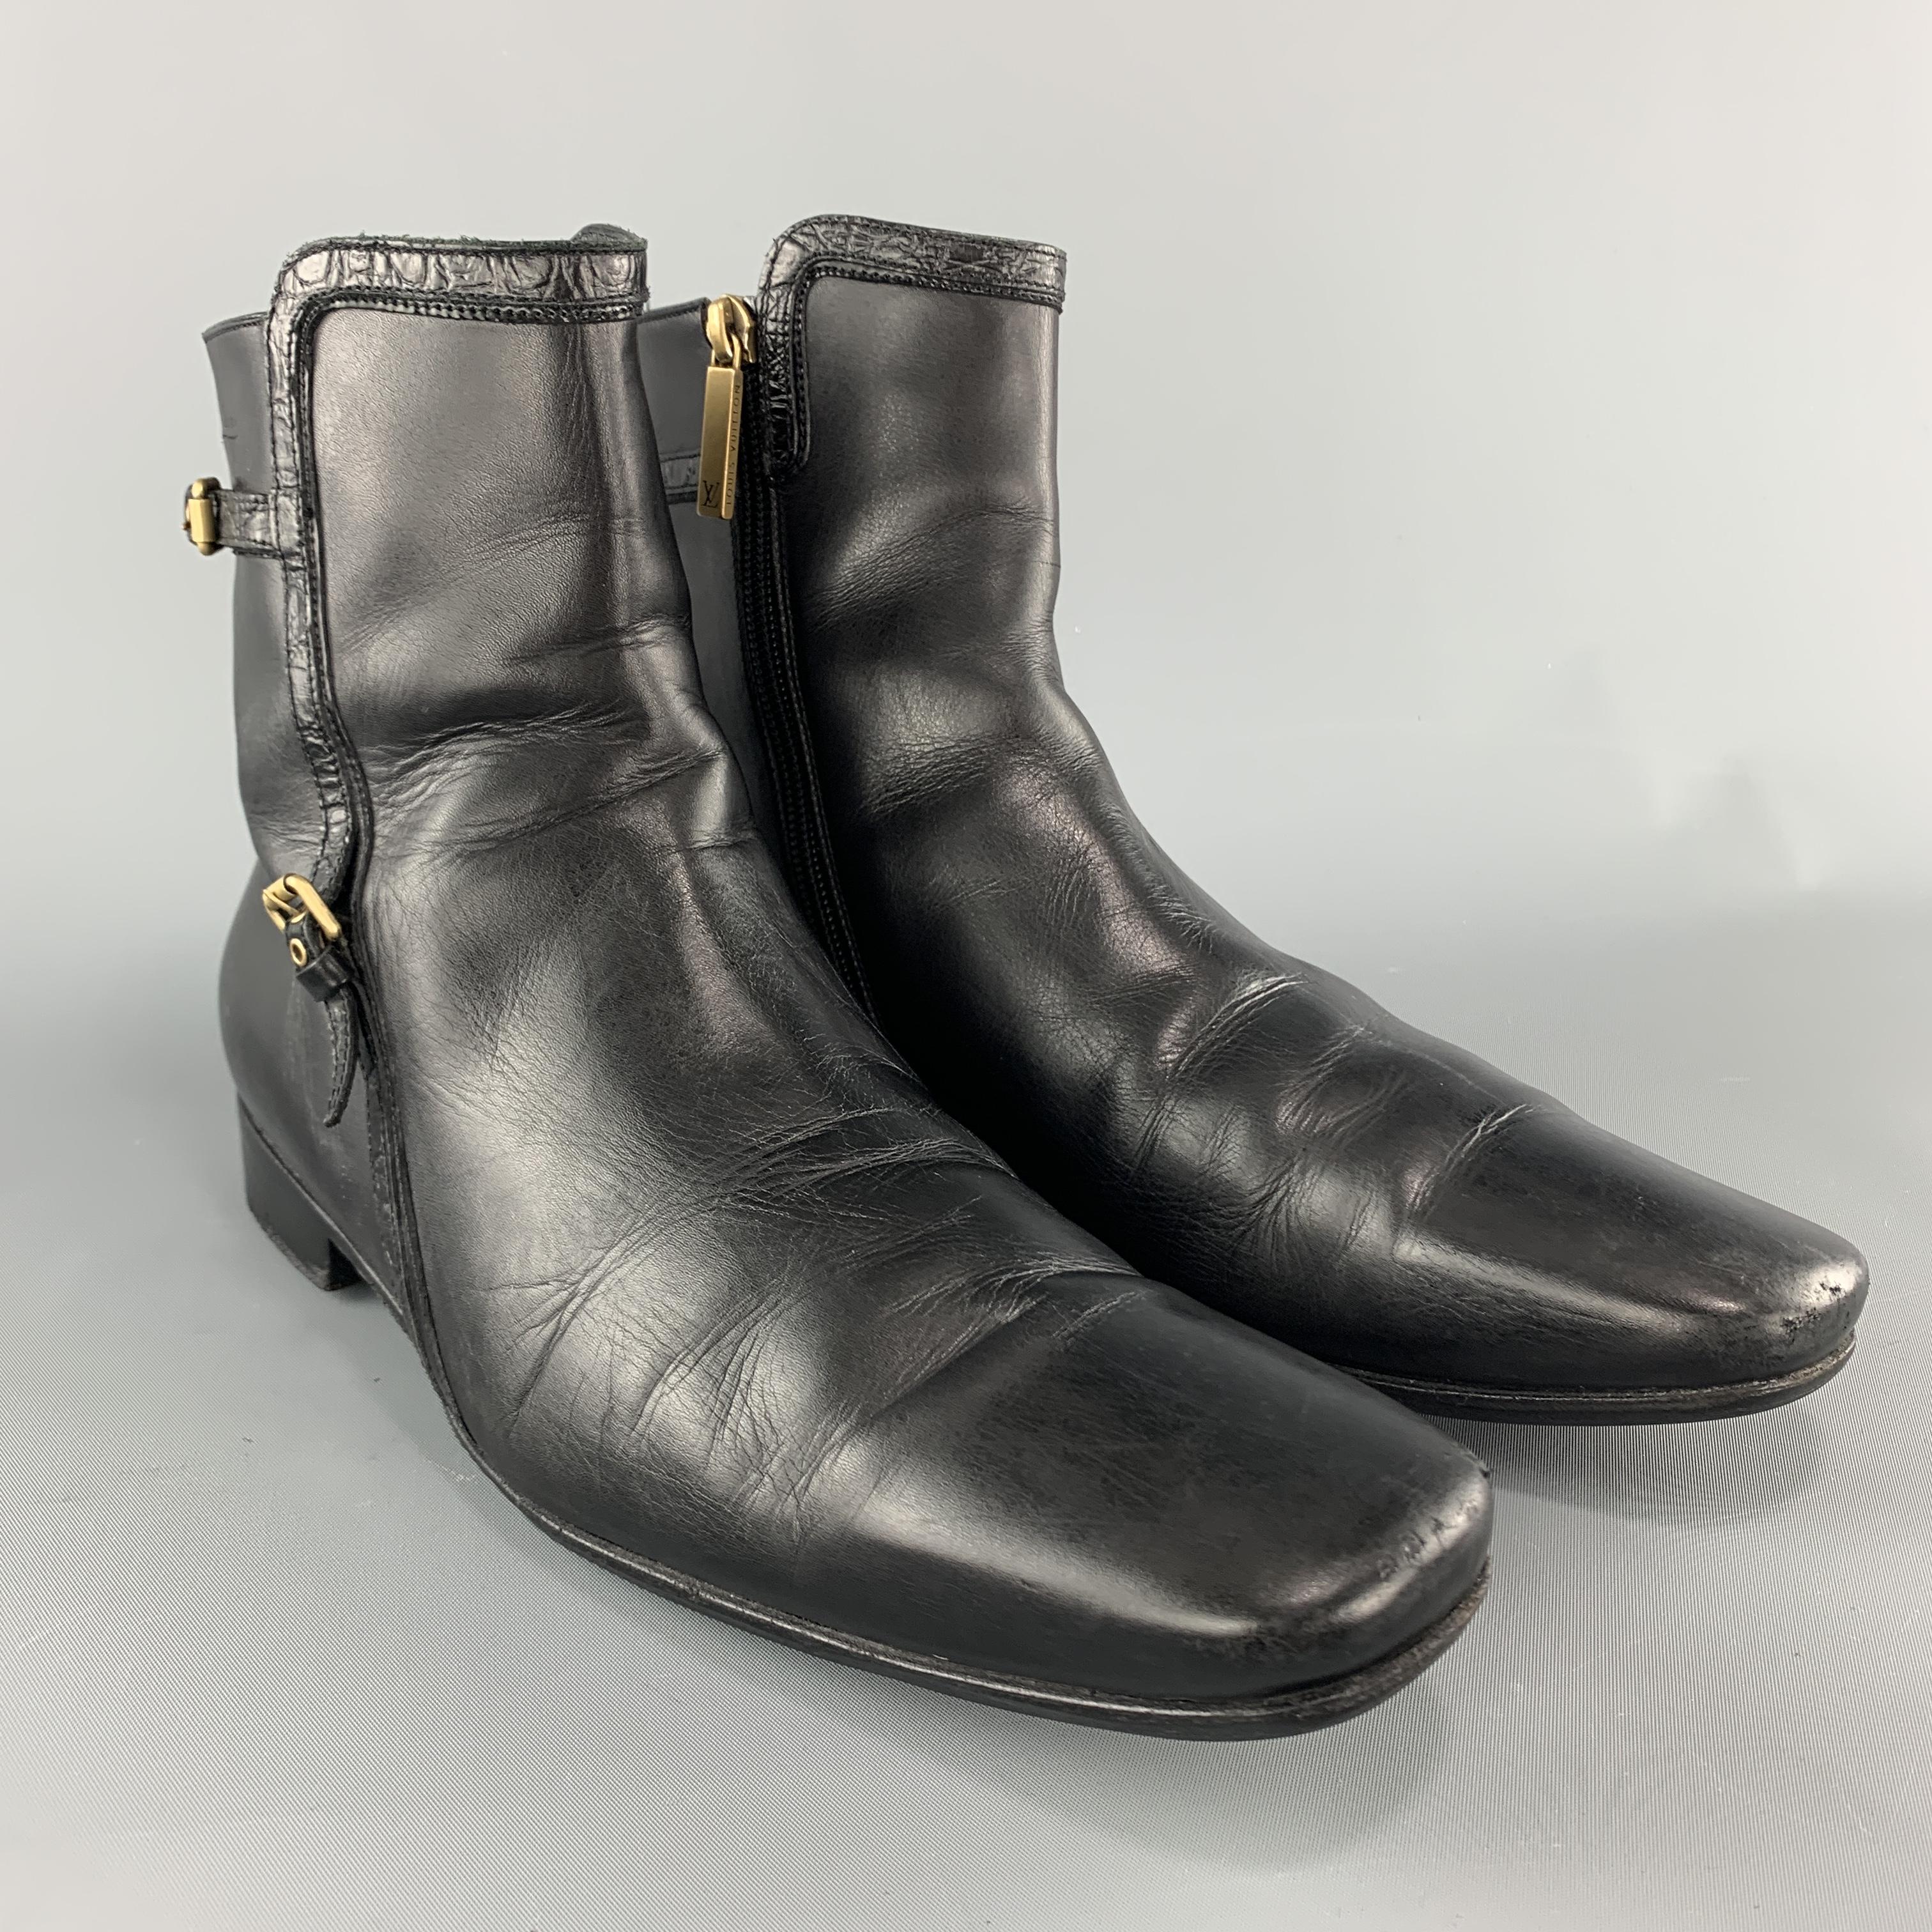 Men's LOUIS VUITTON Size 8 Black Leather Embossed Trim Buckle Zip Boots